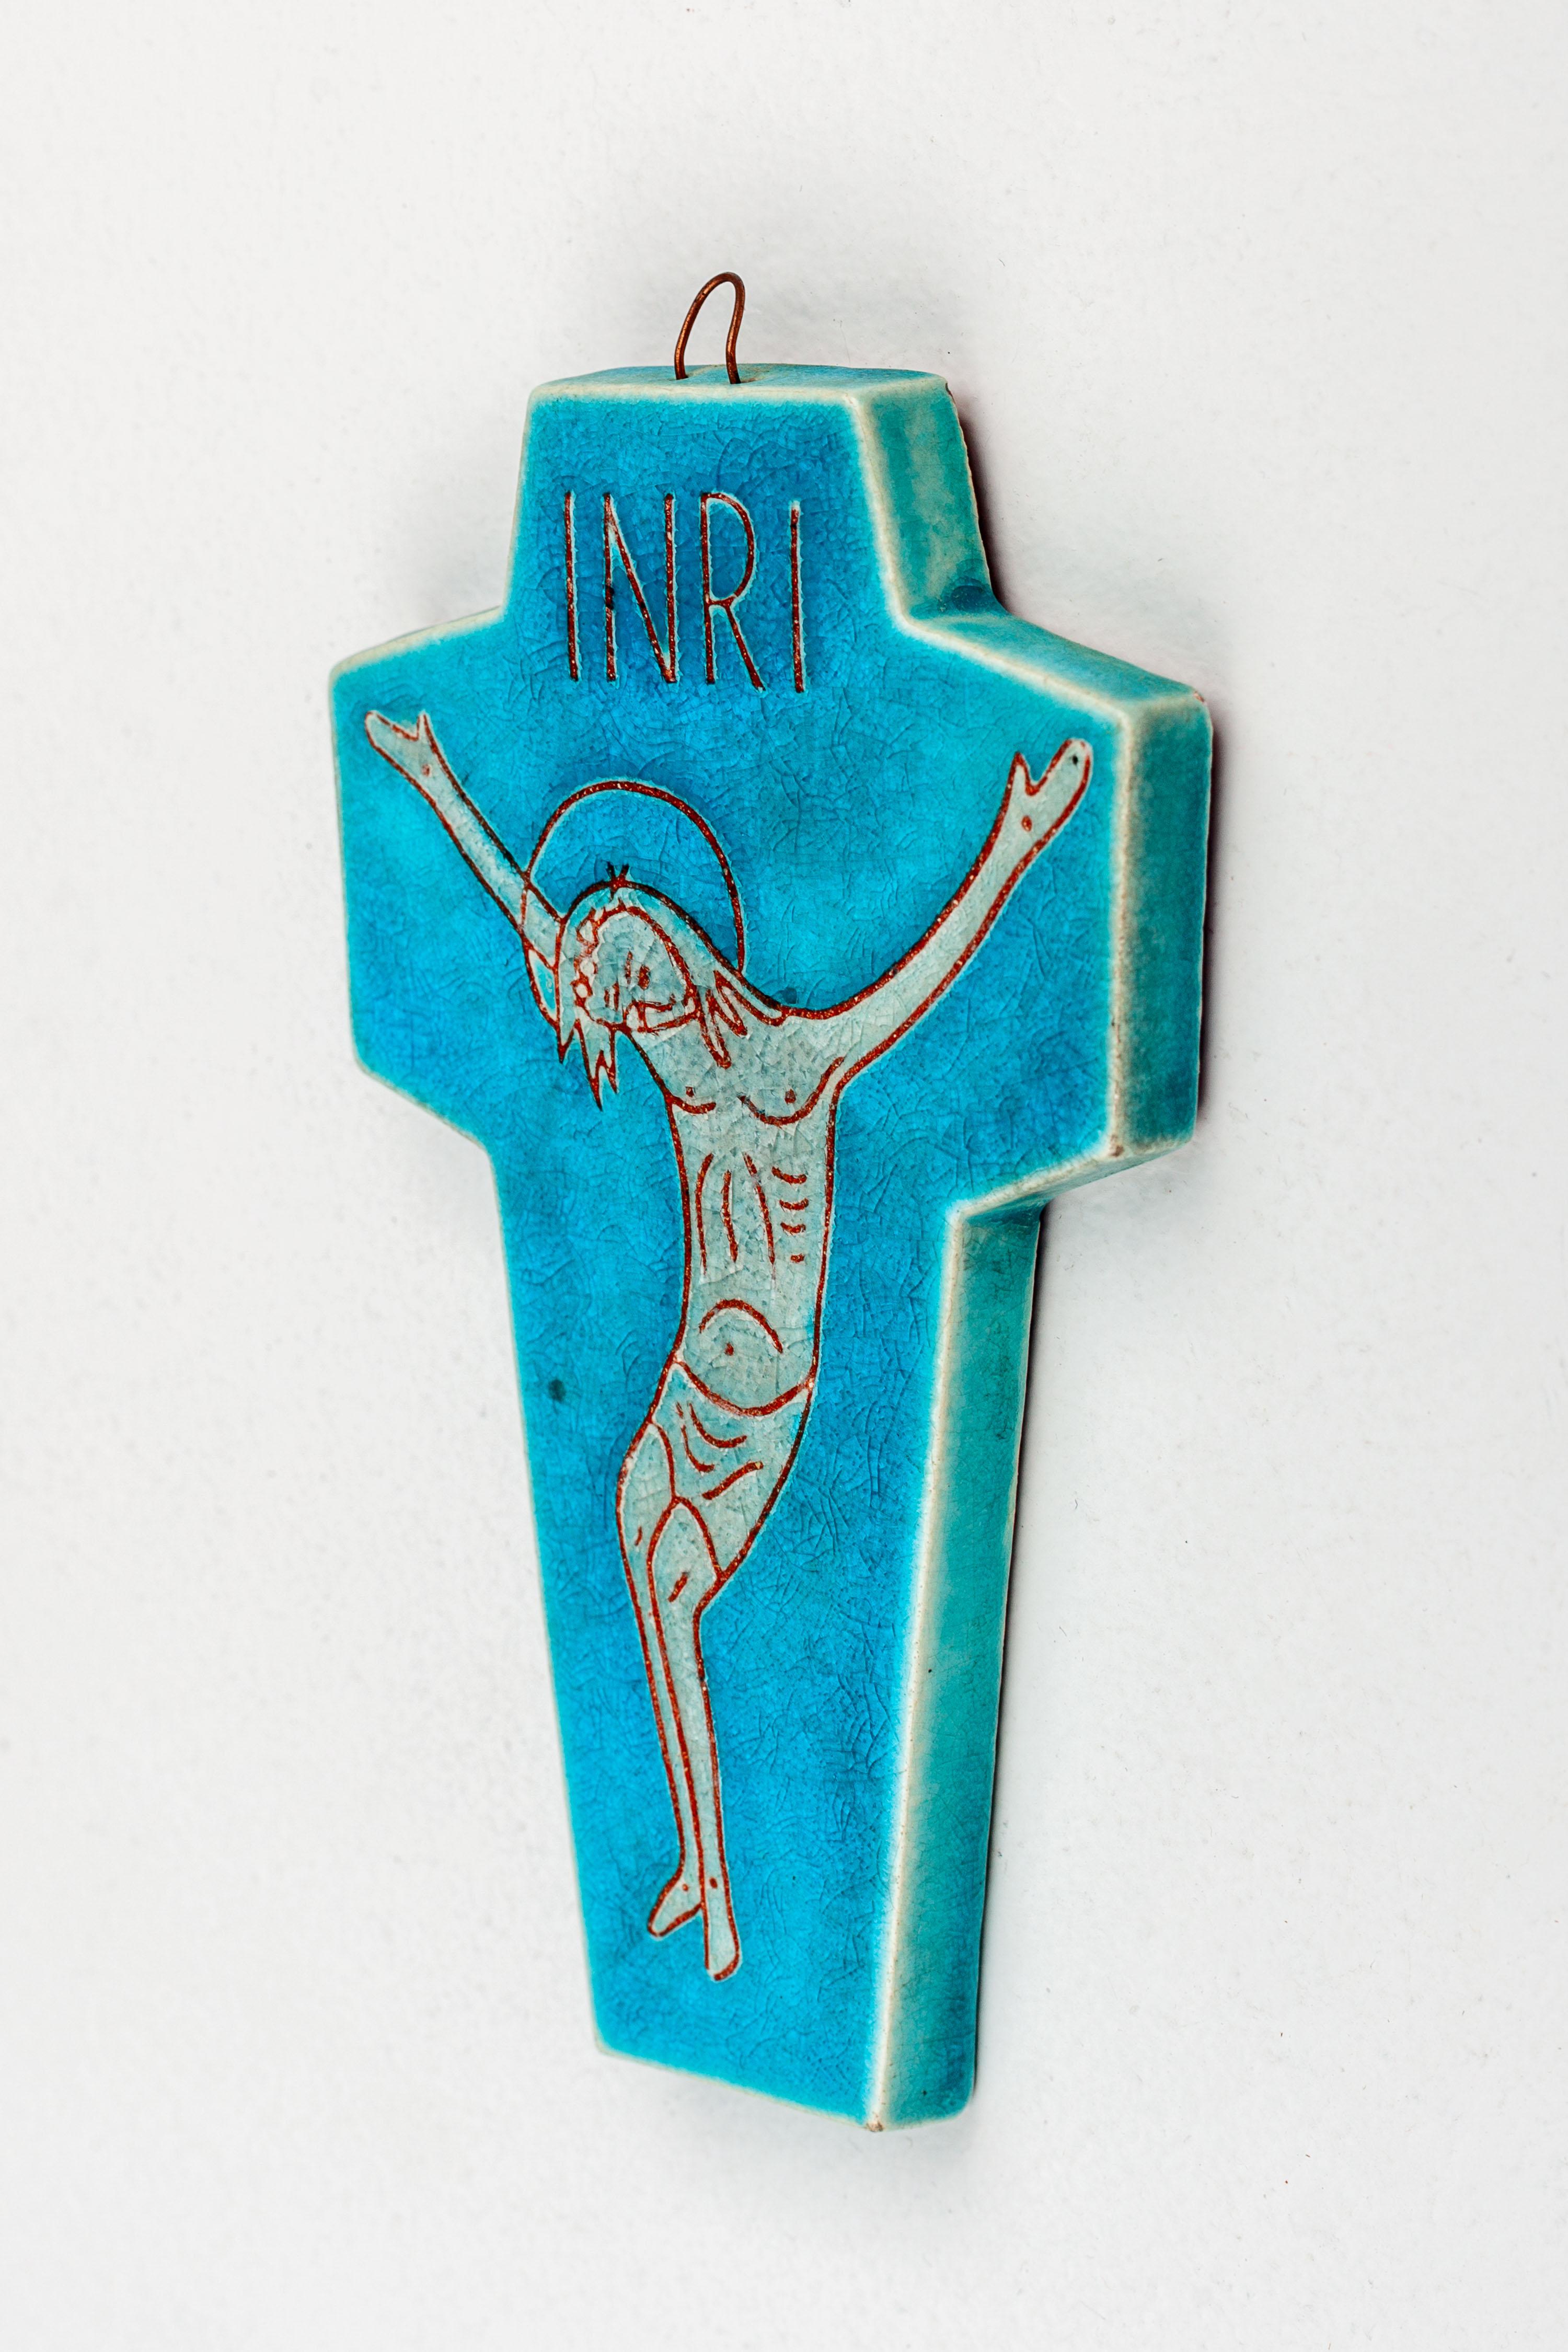 Mid-20th Century Midcentury Blue & Green Ceramic Wall Cross, Jesus INRI, Handmade in Europe For Sale